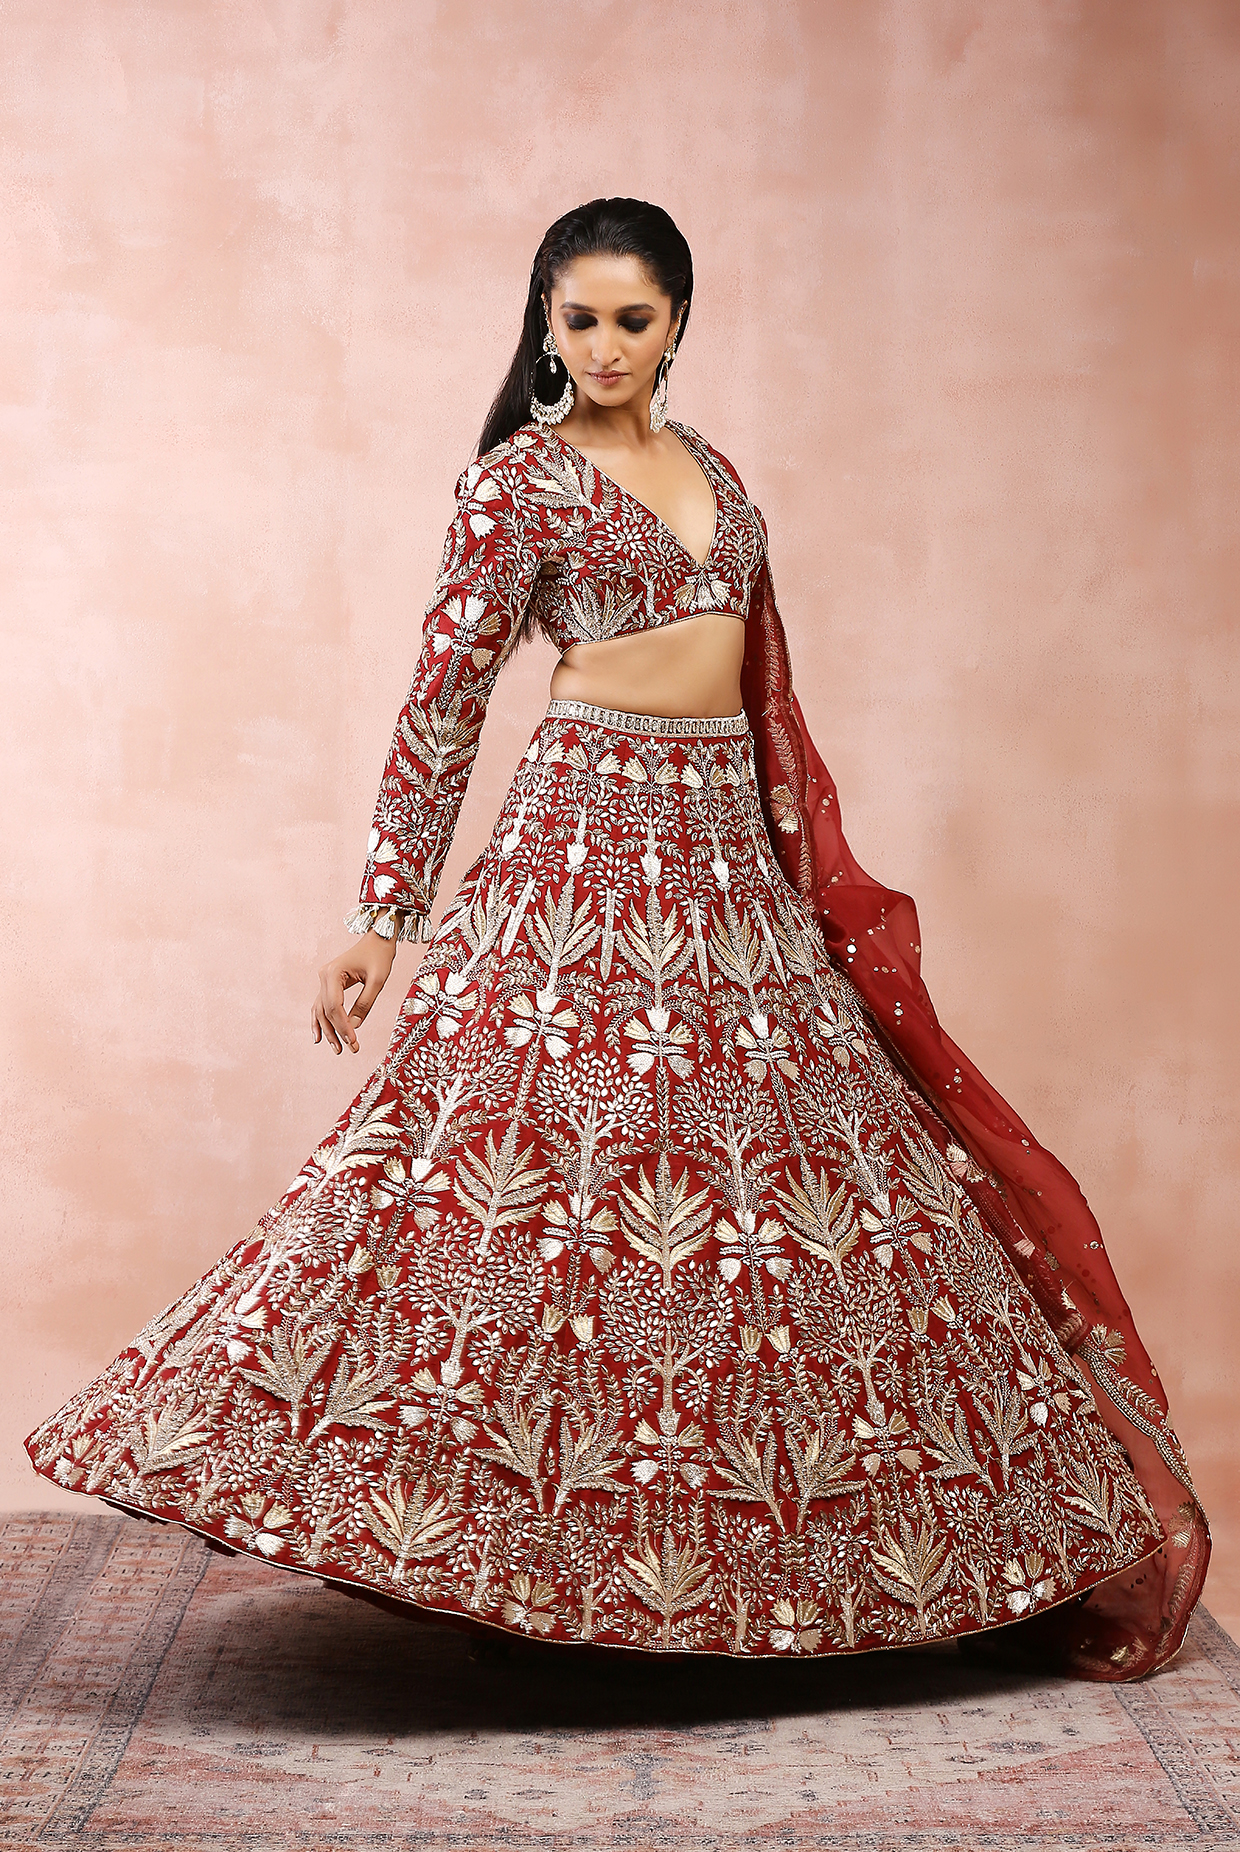 Dark Red Bridal Lehenga Sequins work net Lehenga Choli Wedding Dress Sari  Saree | eBay